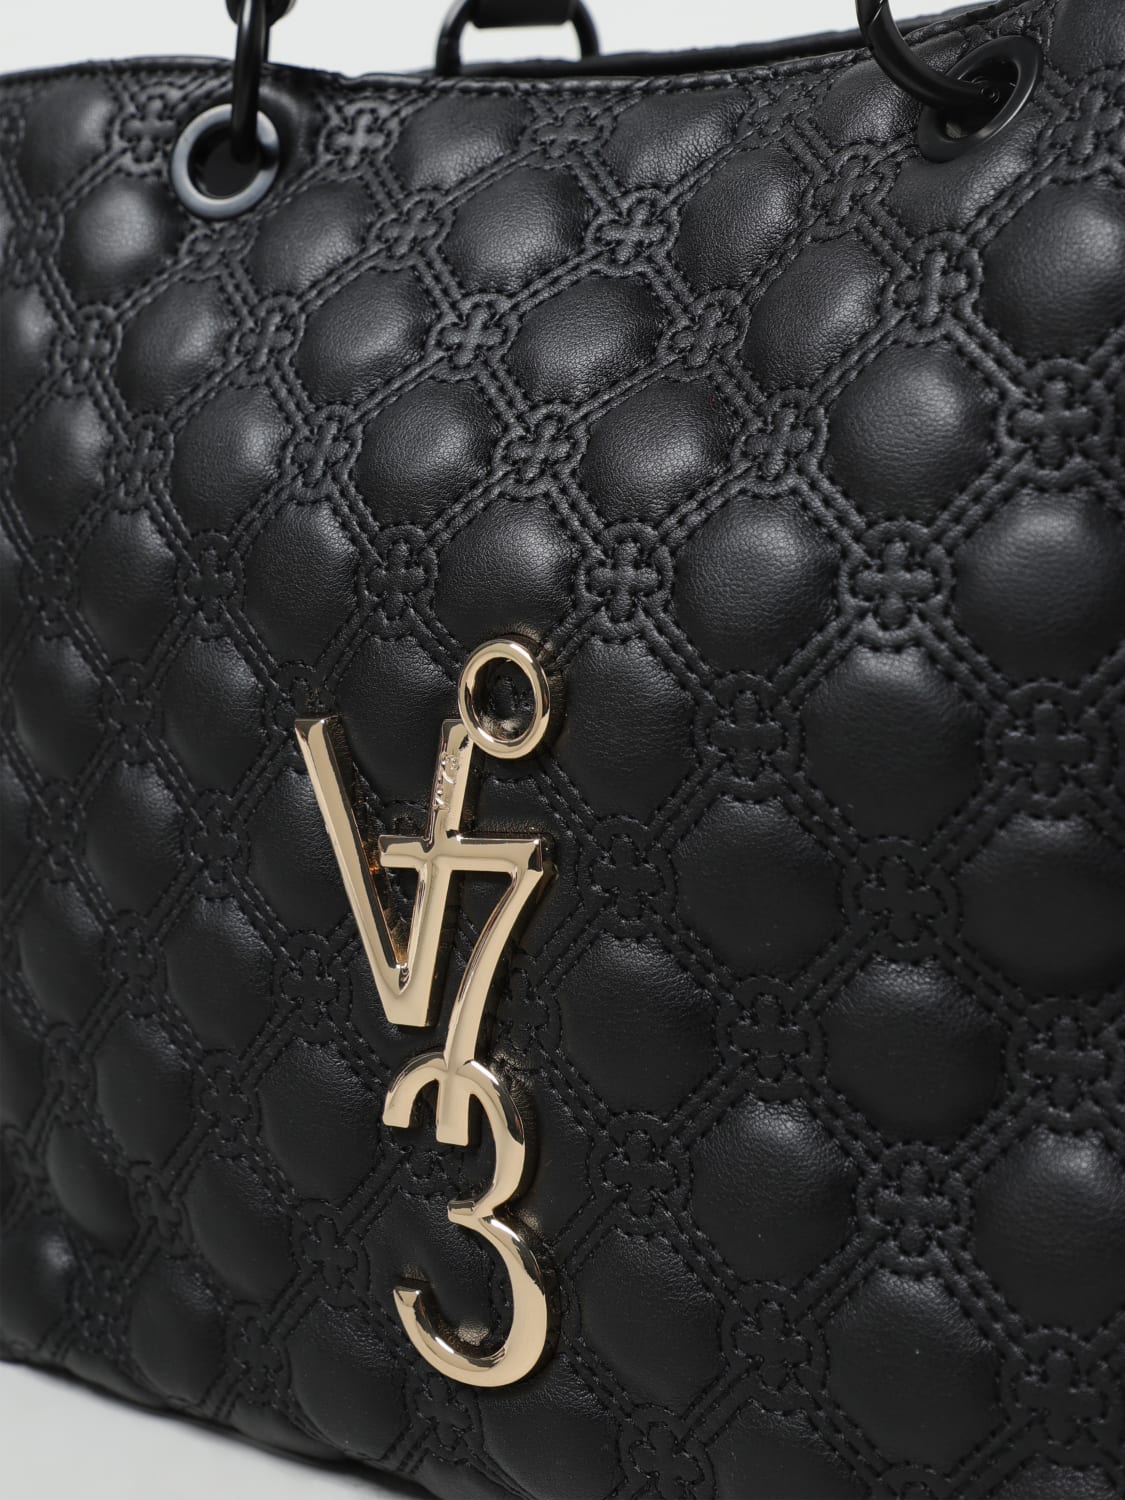 Bolsos de mano Louis Vuitton de color negro para Mujer - Vestiaire  Collective